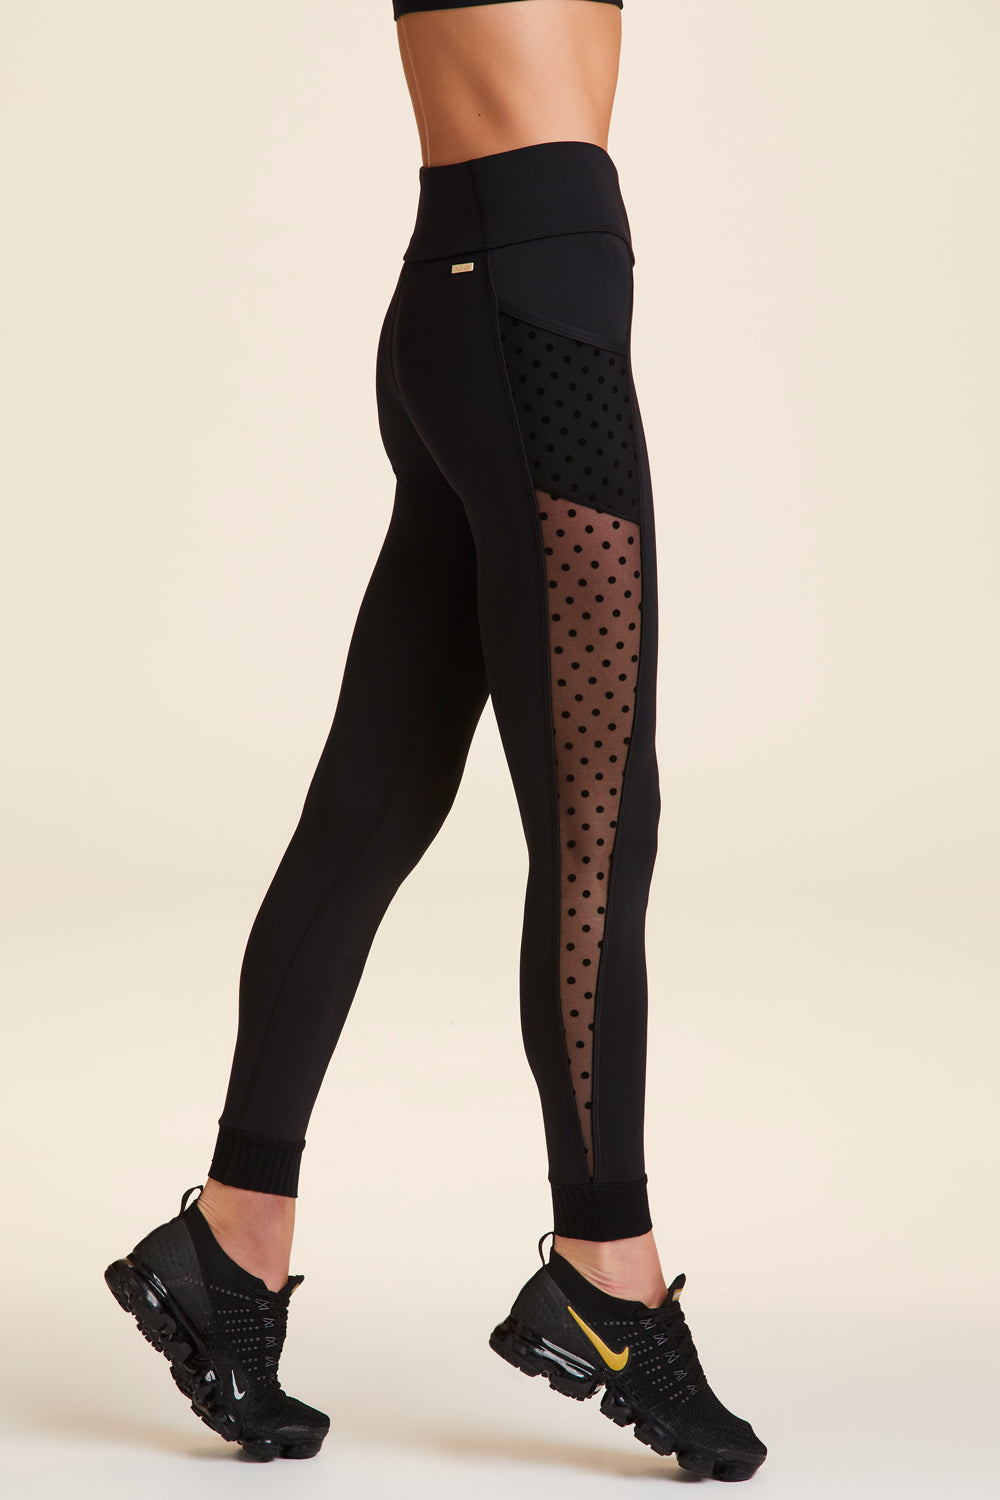 Sheer Black Mesh Leggings XS S M L XL 2xl 3xl Plus Size Stretch High-waist  Durable Tights Punk Goth Pants Nylon Spandex - Etsy